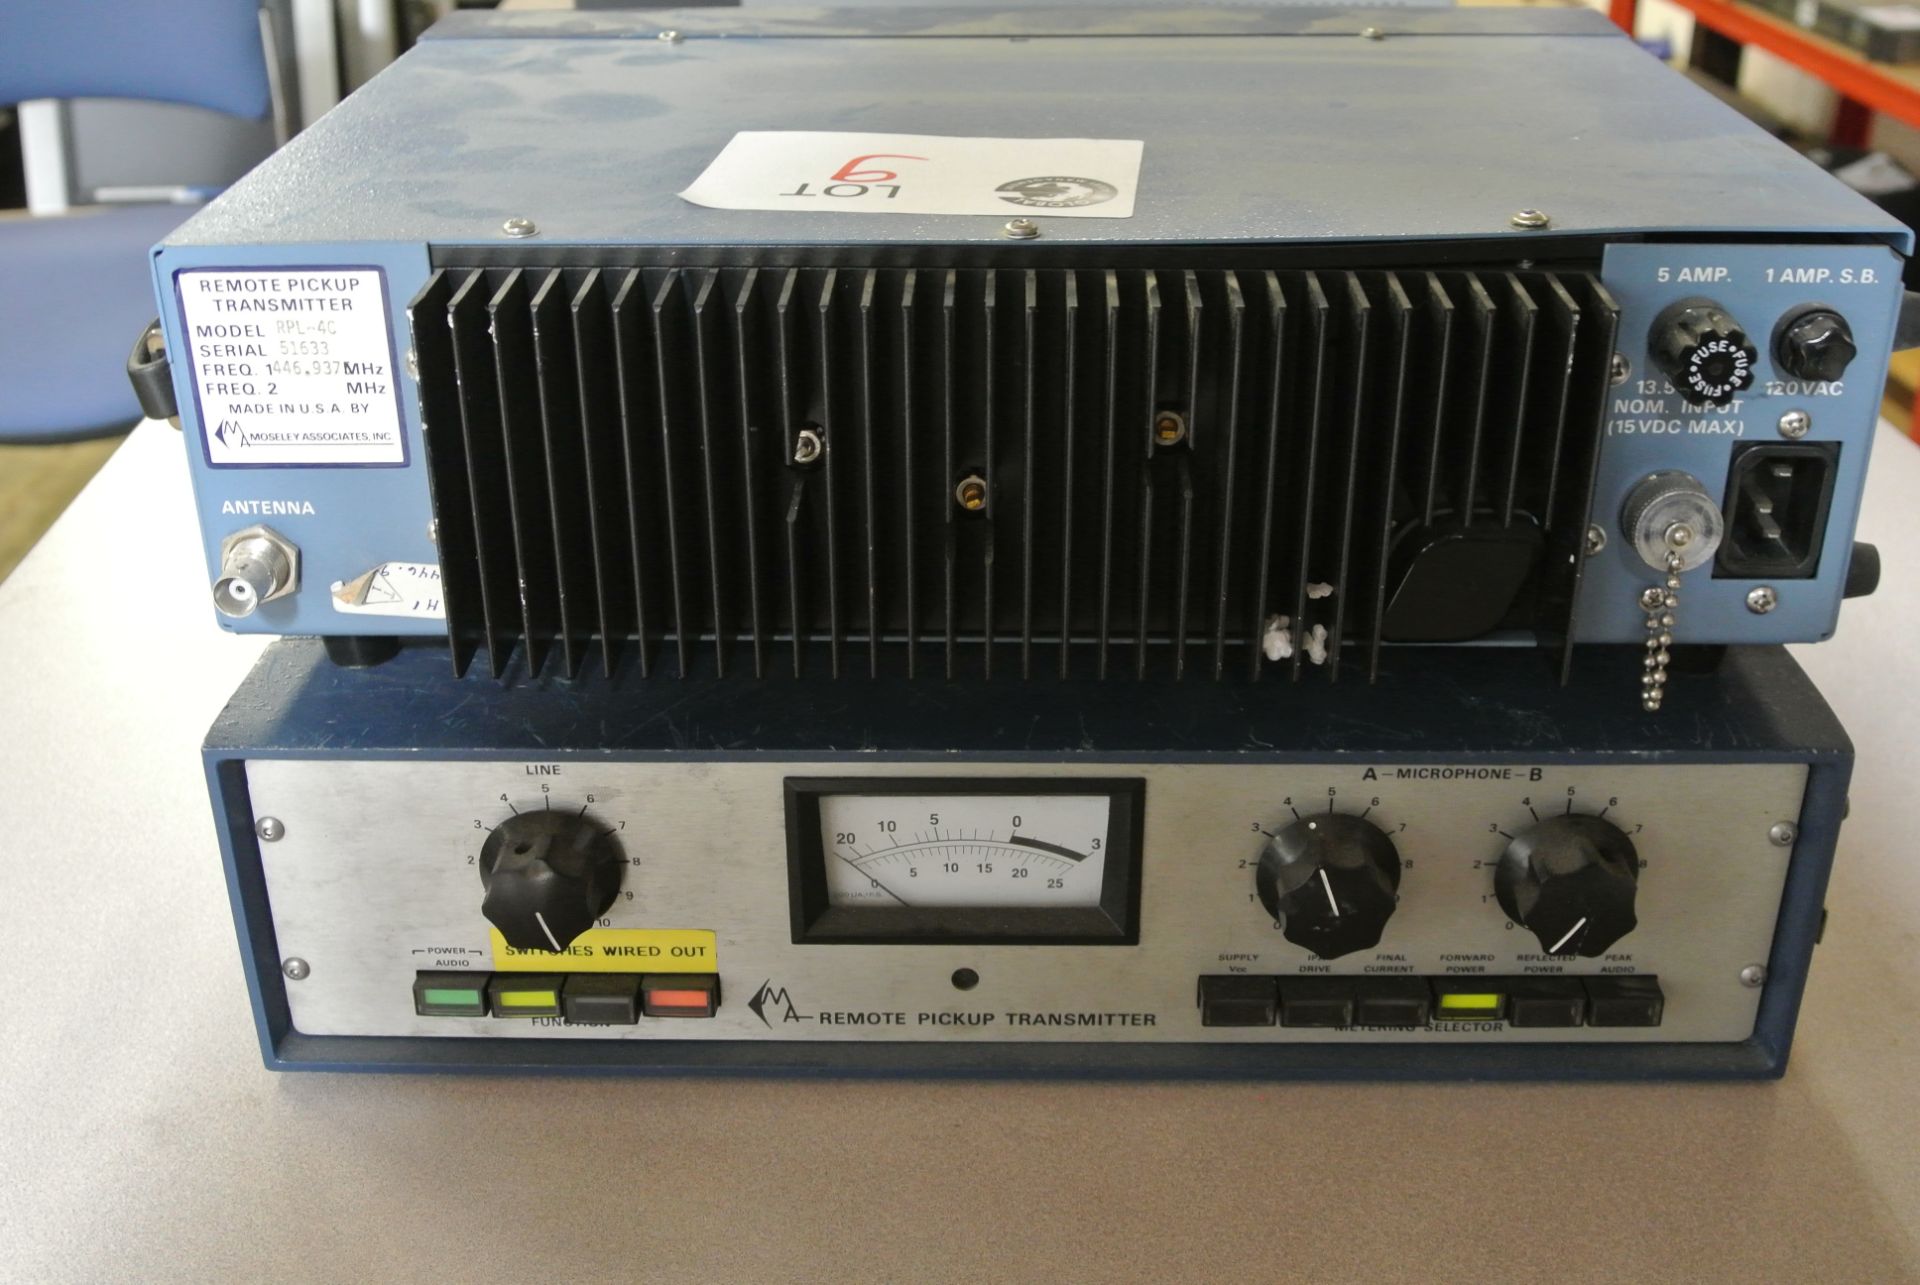 2 x Moseley Associates Inc. Remote Pickup Transmitter RPL 4C - Vintage Broadcast Transmitters - Image 5 of 6